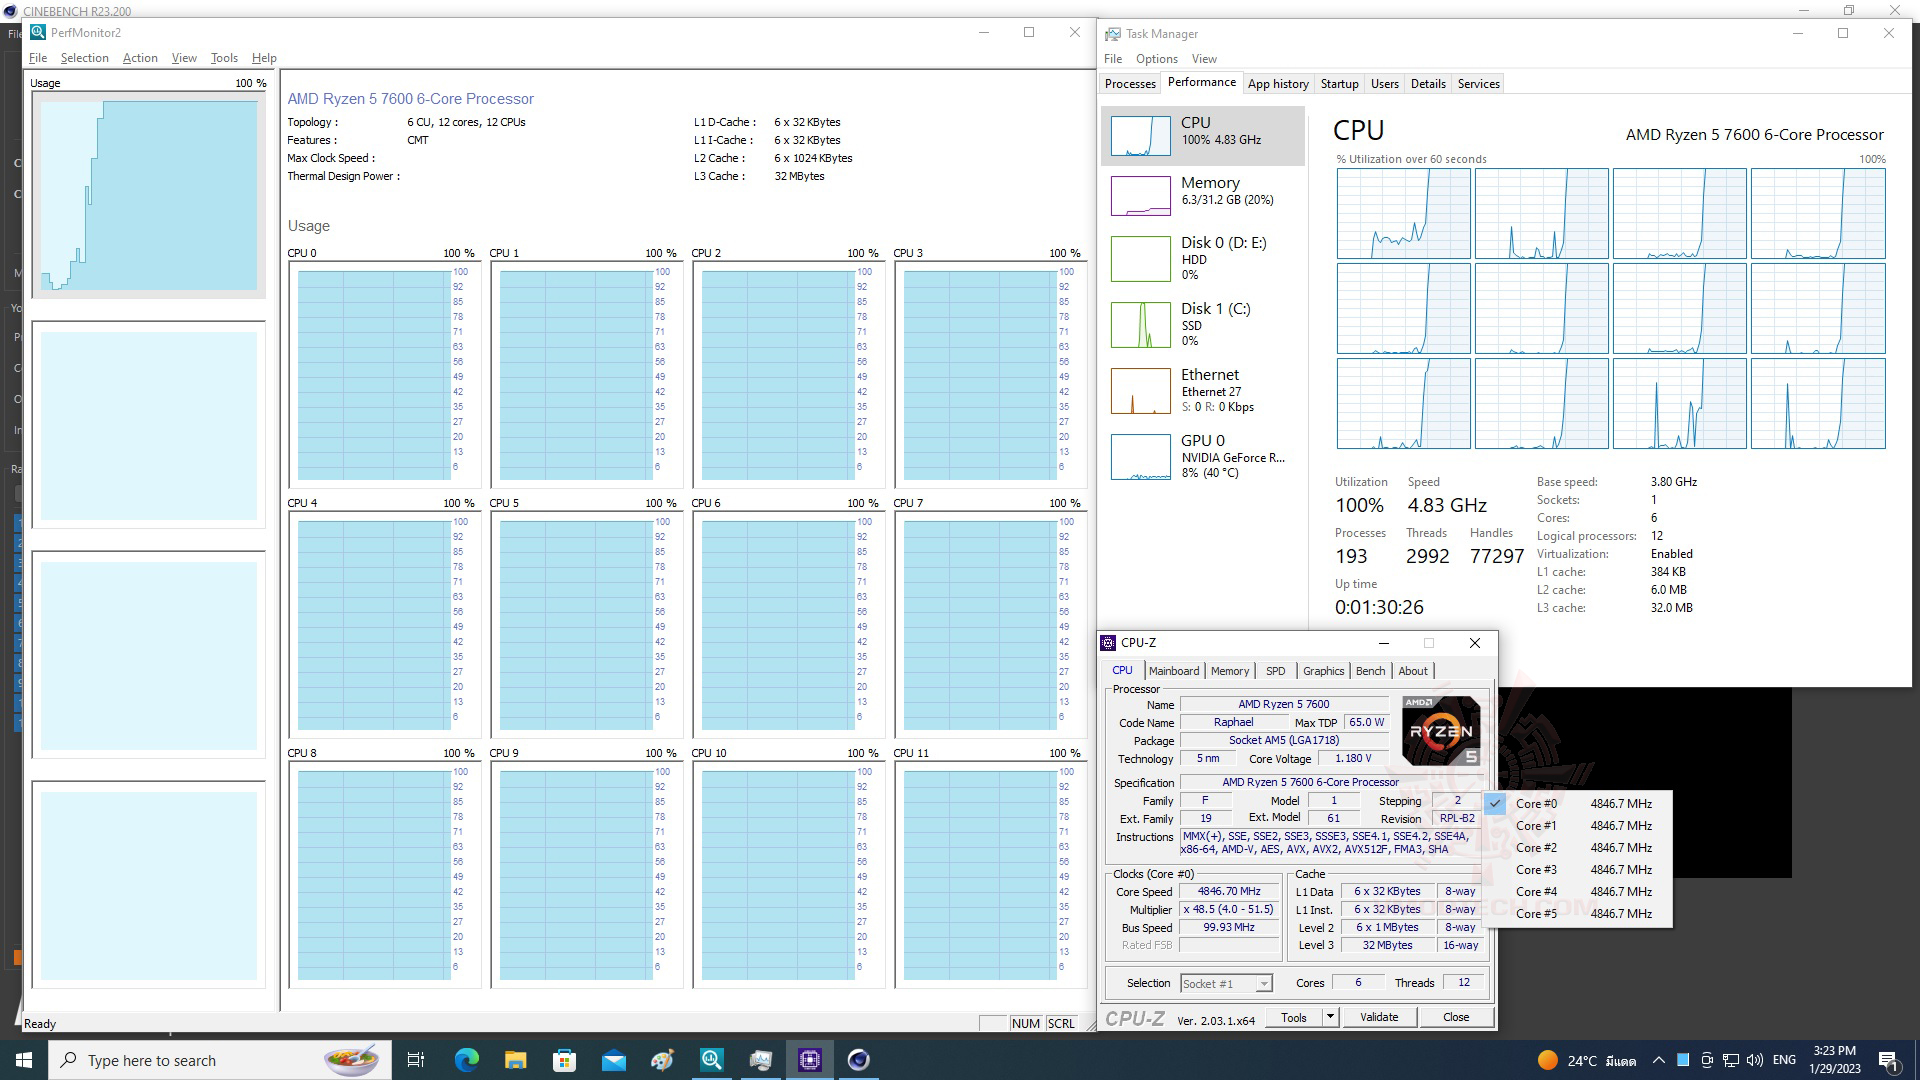 core AMD RYZEN 5 7600 PROCESSOR REVIEW